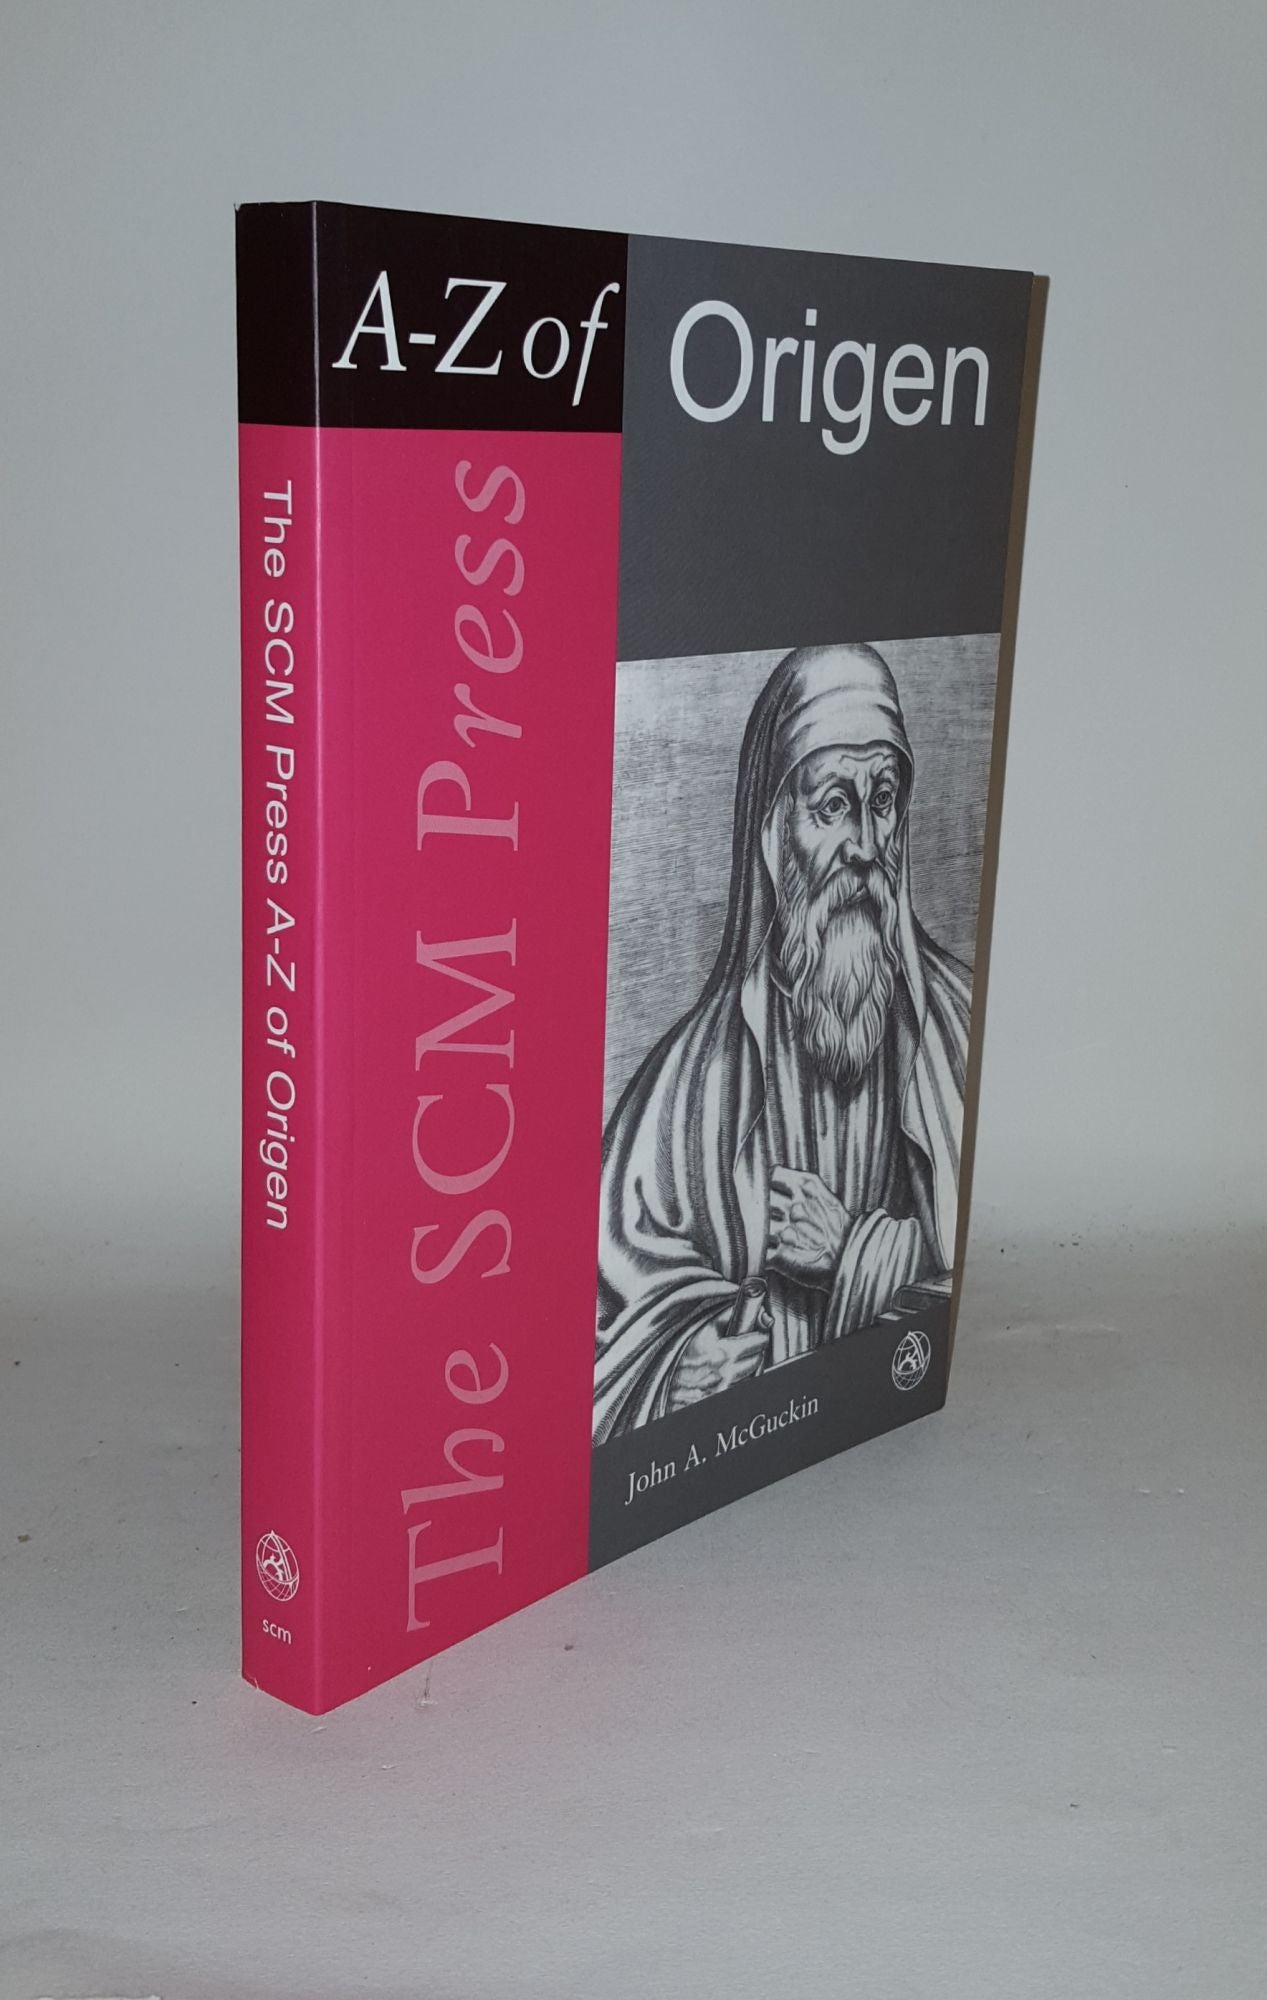 McGUCKIN John A. - The Scm Press a-Z of Origen